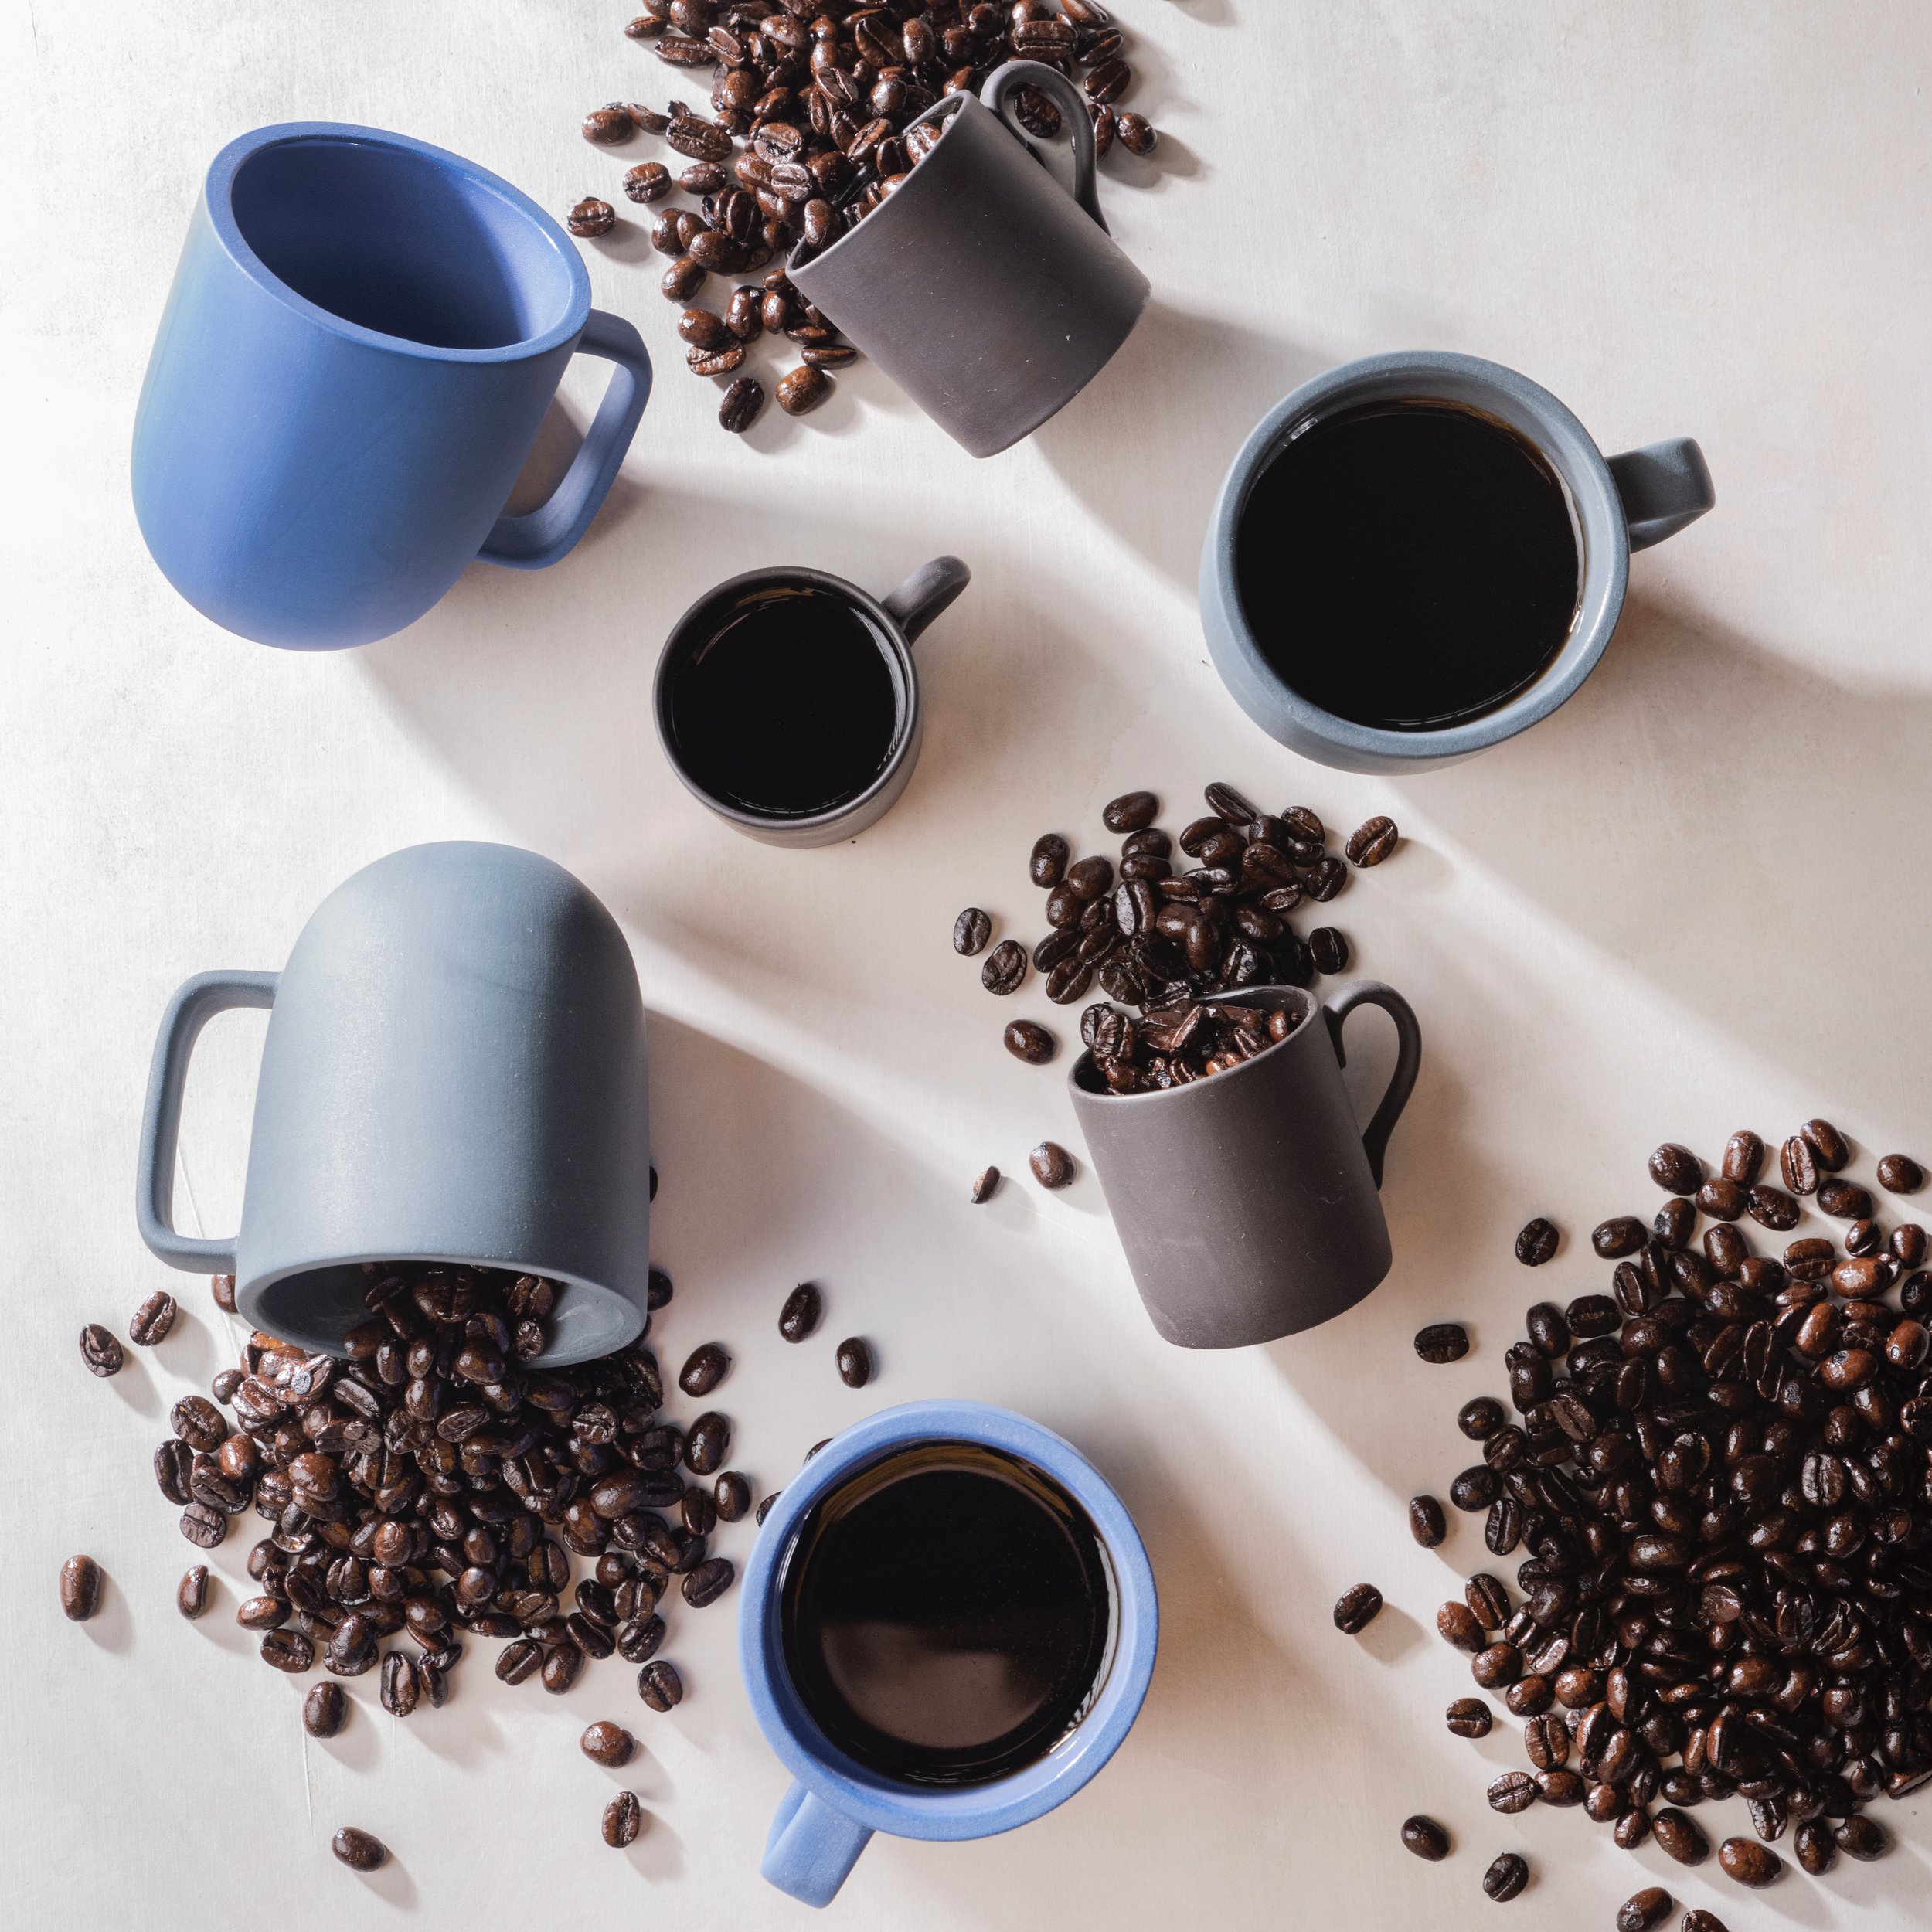 5_White:blue_coffee cups.jpg